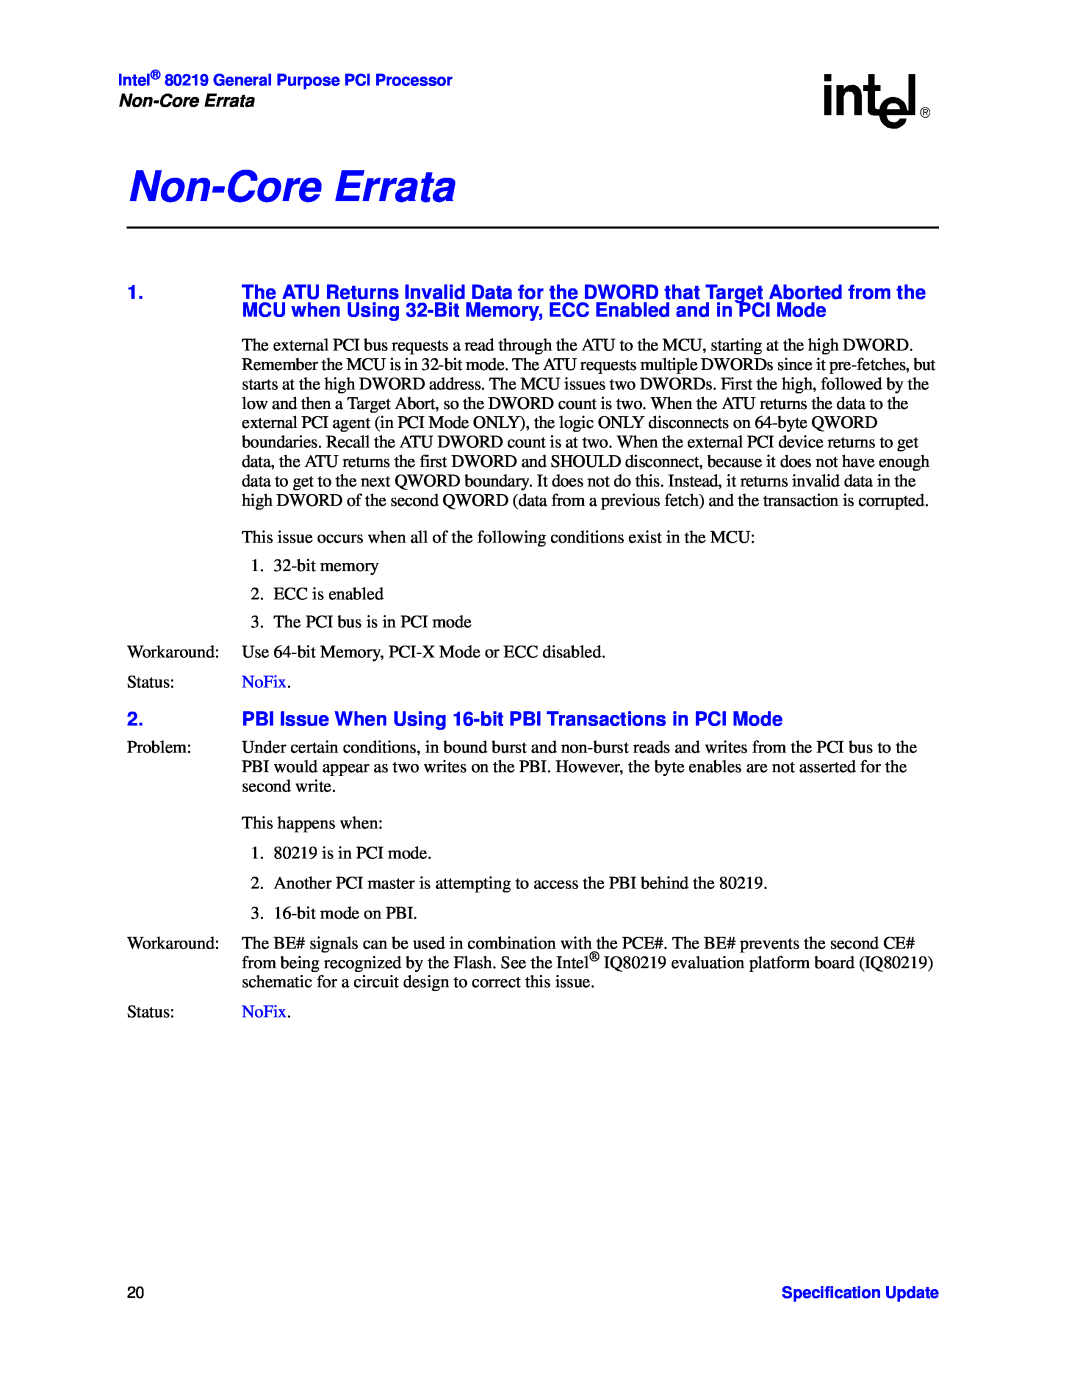 Intel 80219 specifications Non-CoreErrata 